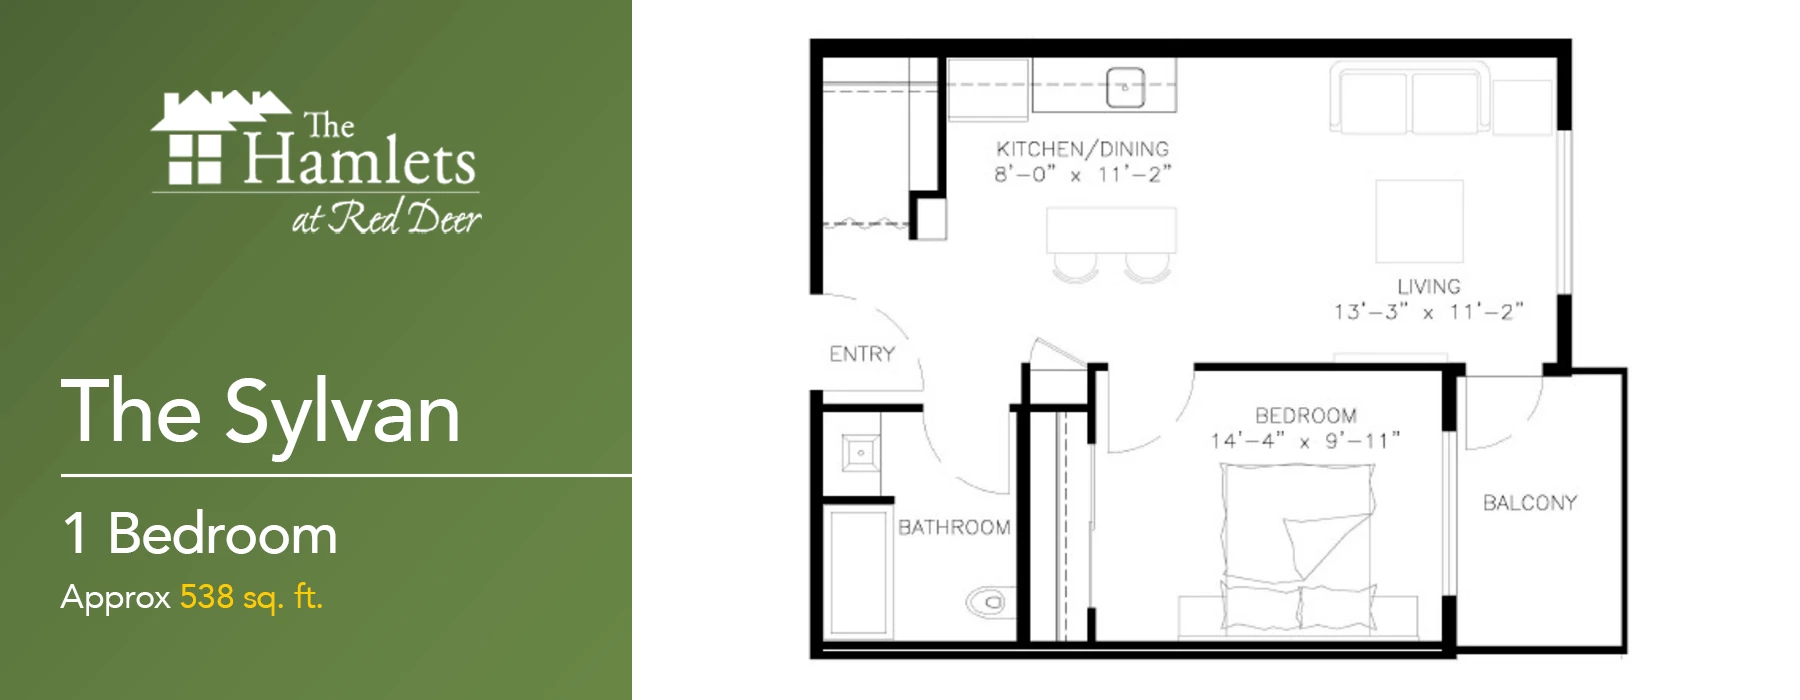 One bedroom floor plan for The Hamlets at Red Deer